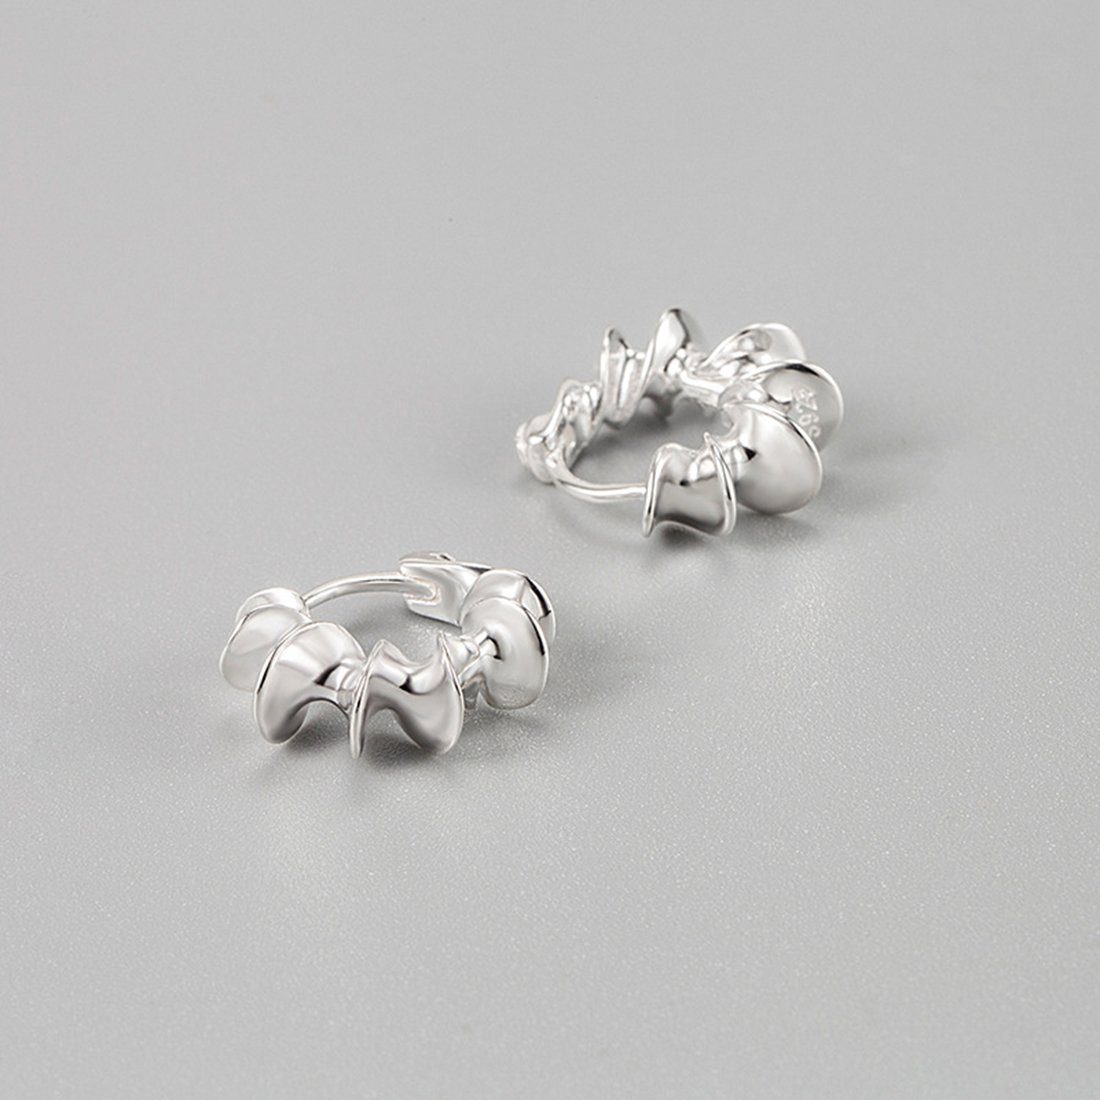 mit Paar Silber Runde Form Sterling in 925 eines Spiralfadens, Ohrhänger Haiaveng Ohrringe Ohrclips OhrringeOhrringe